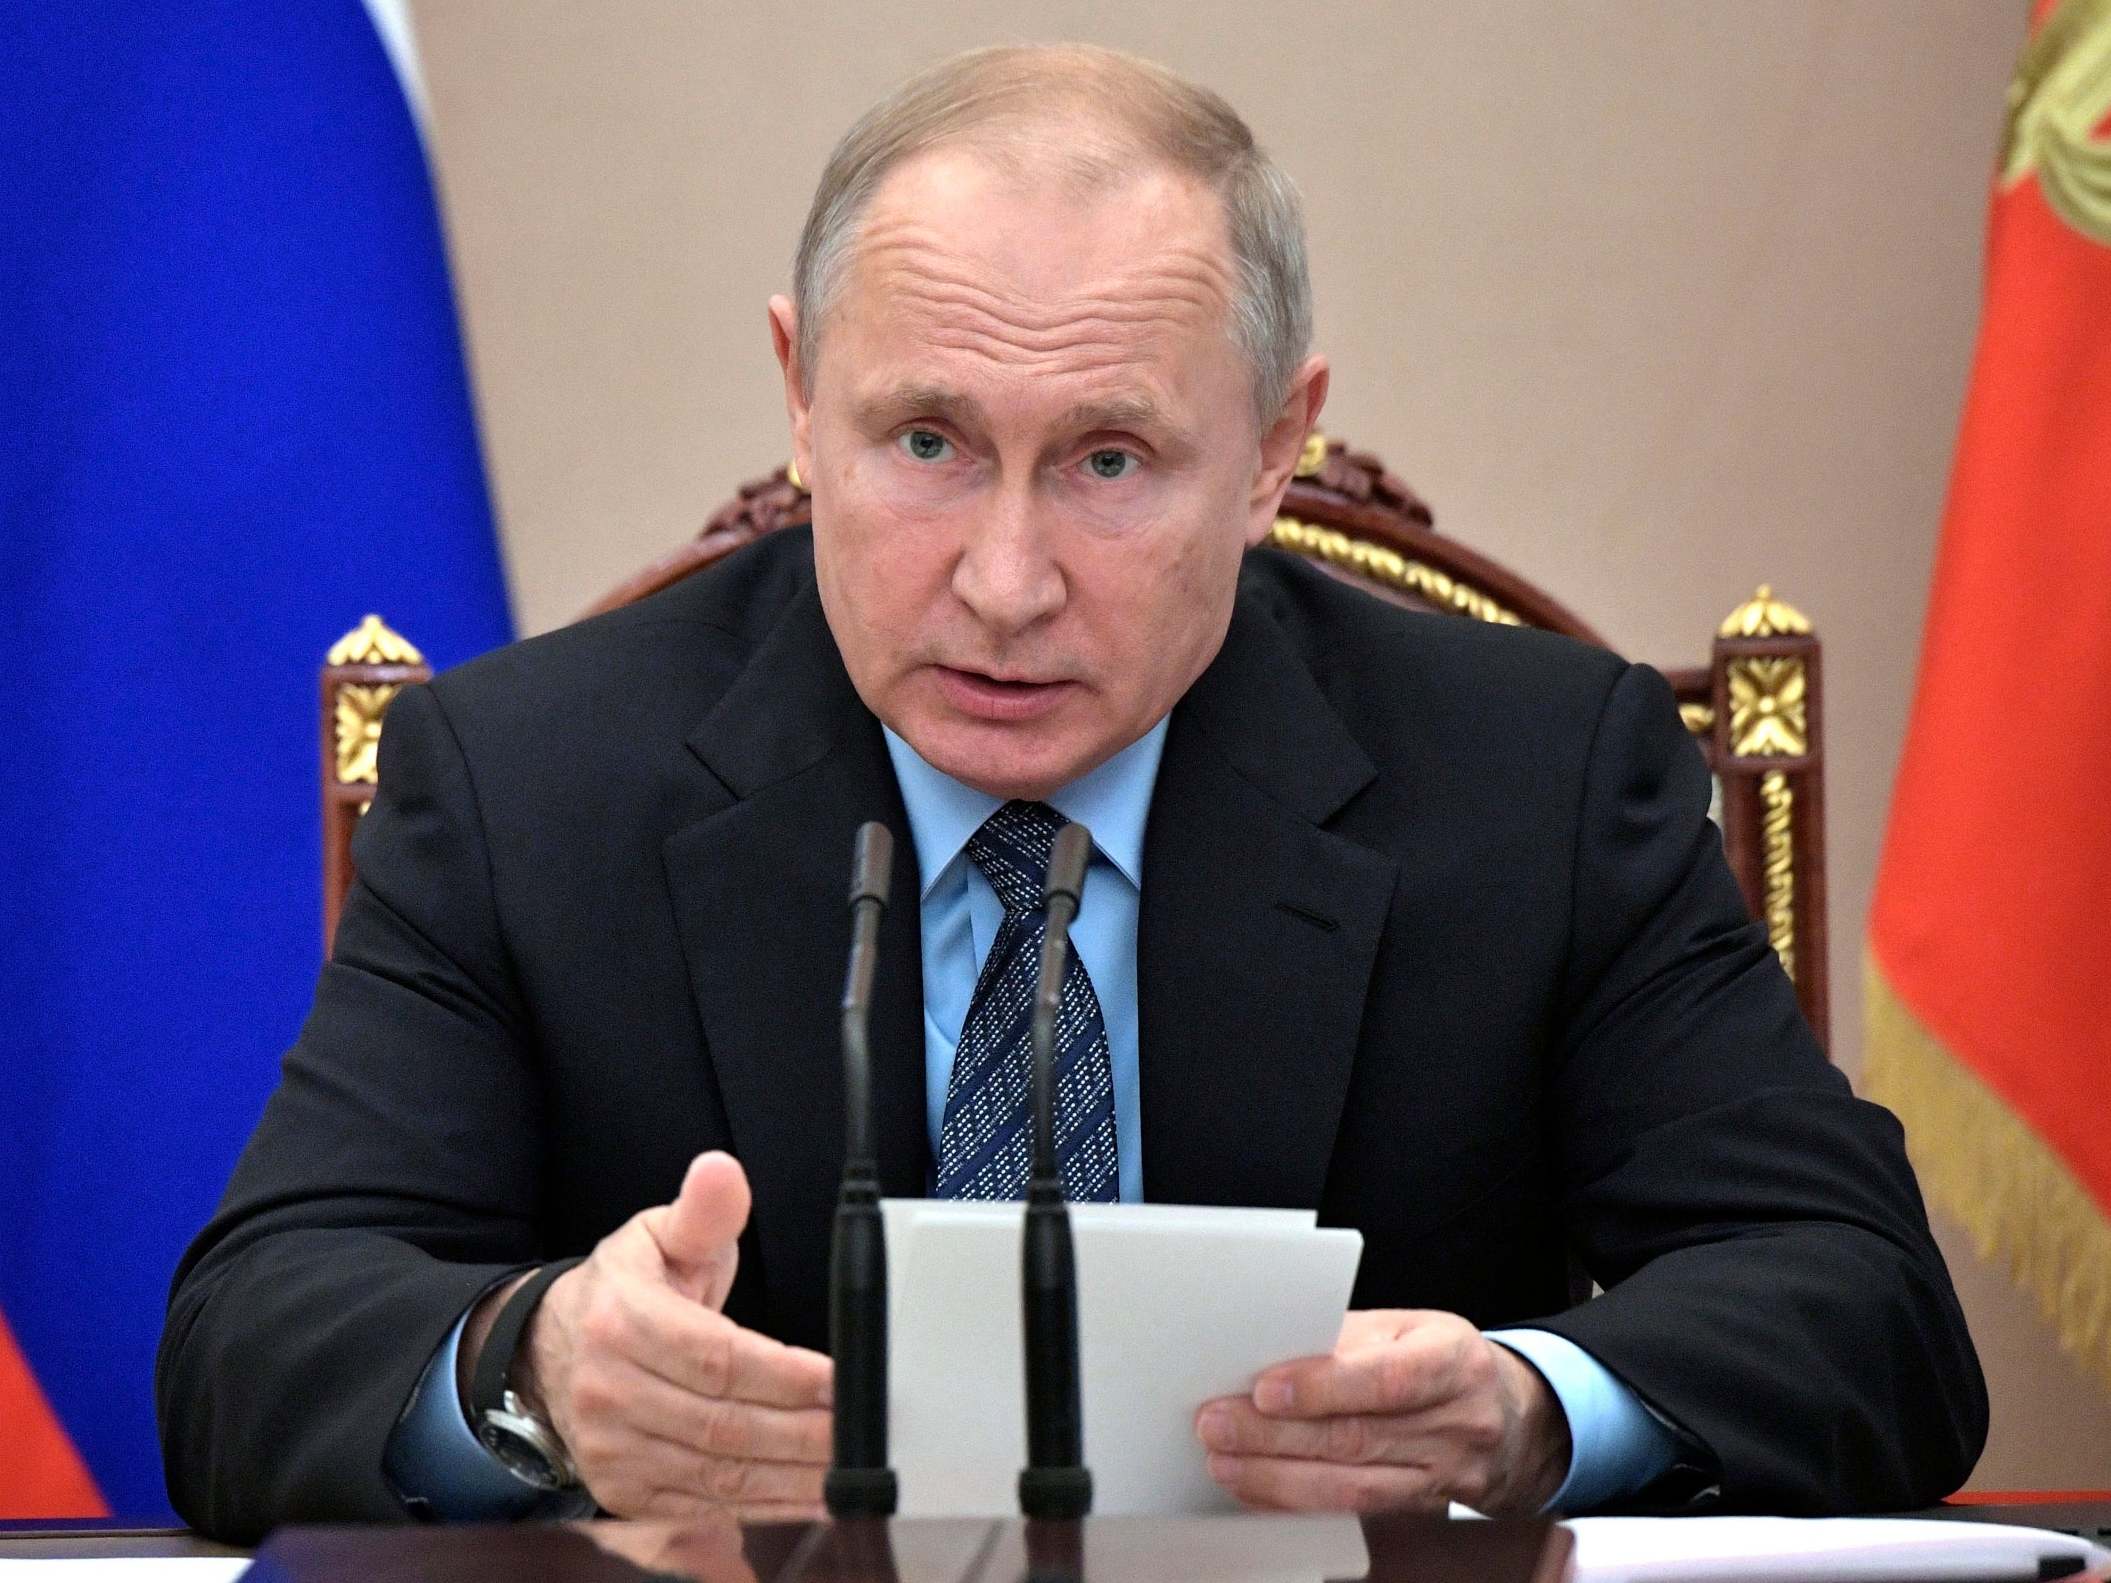 Vladimir Putin is attending the summit